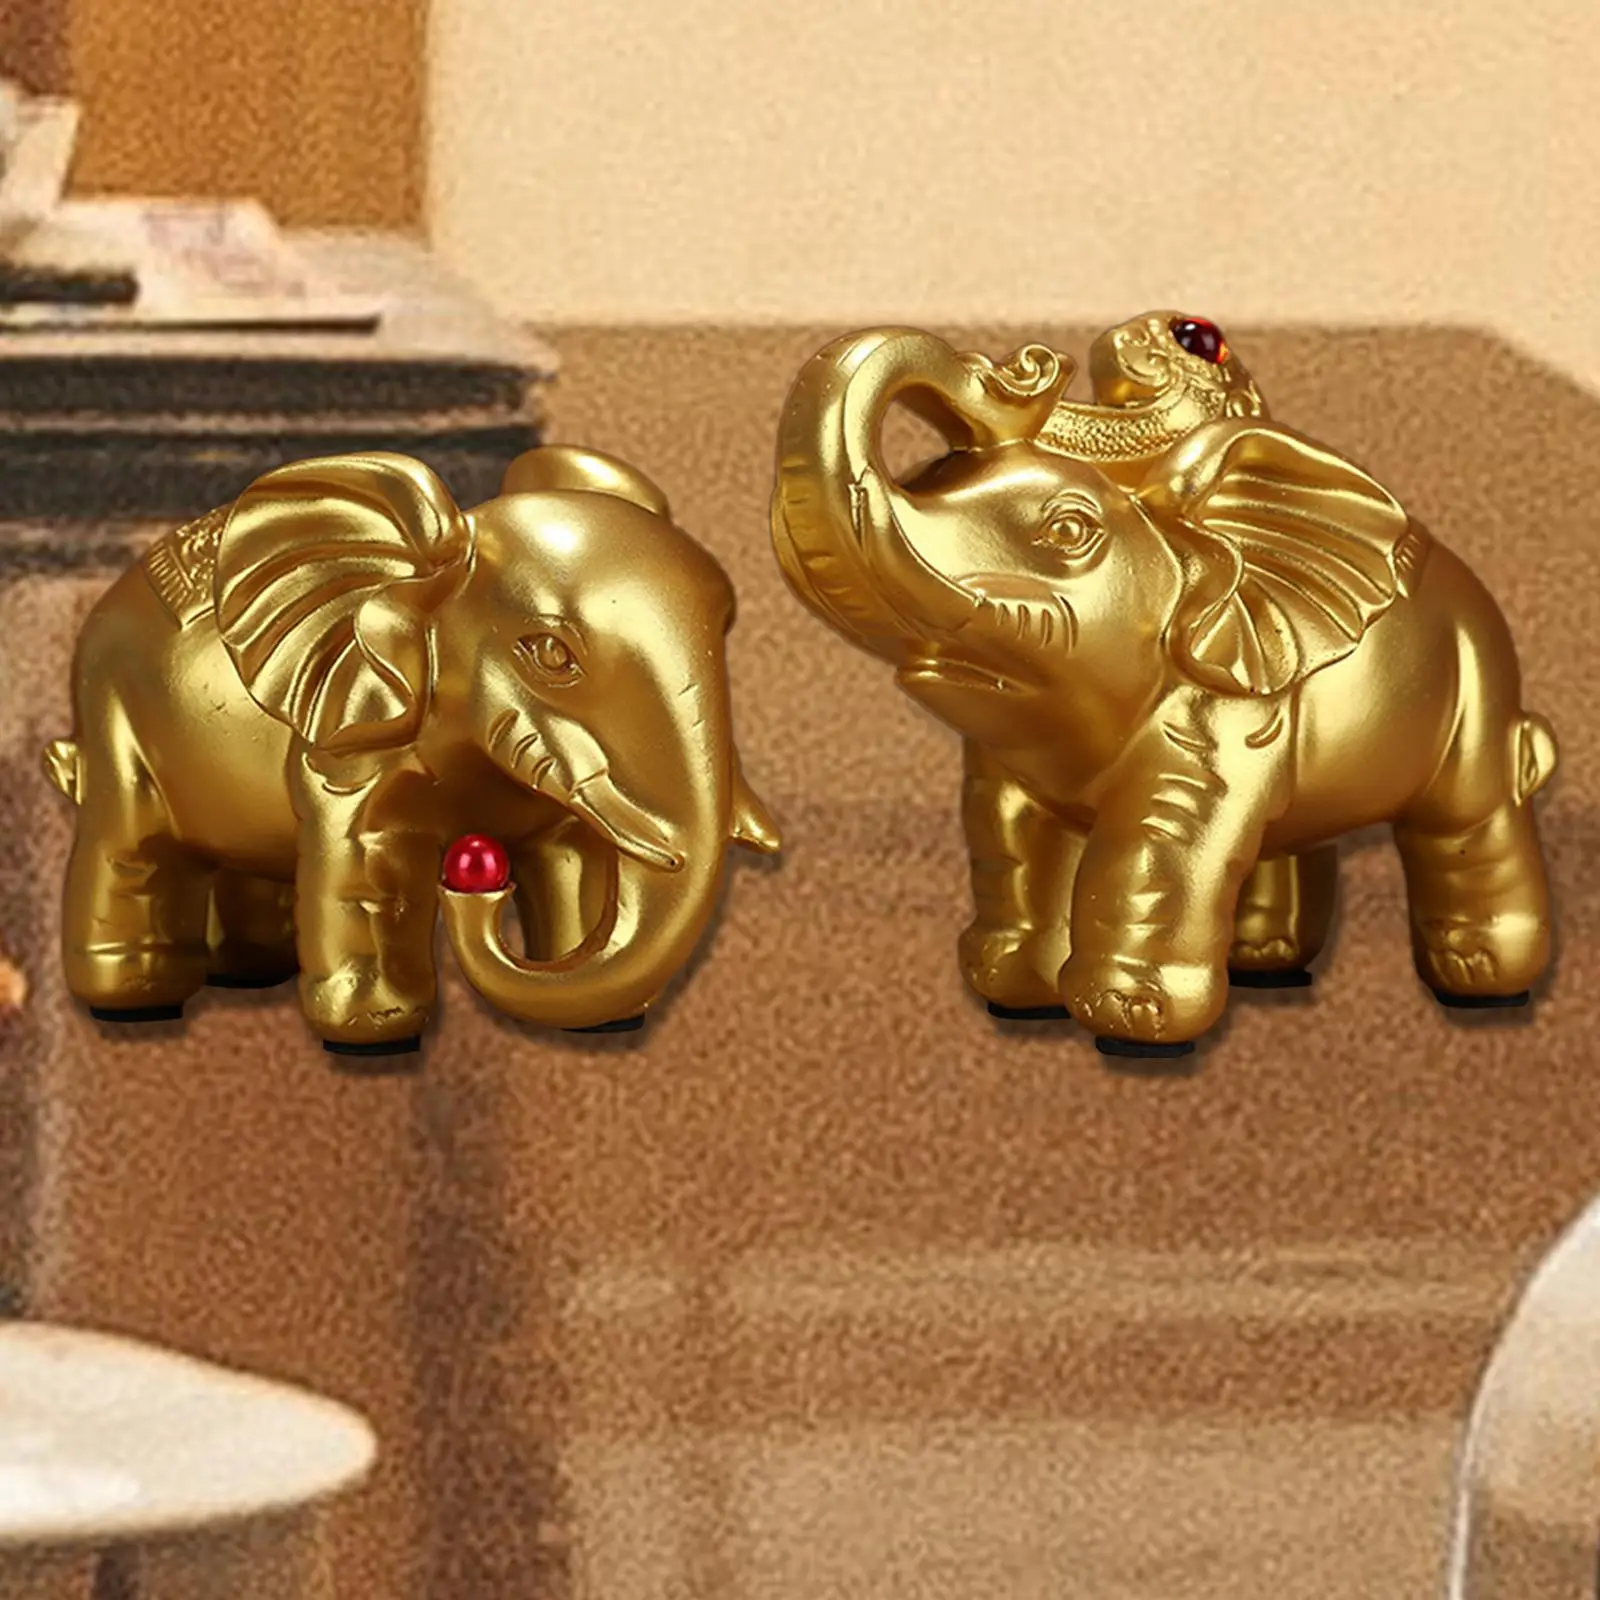 Modern Elephant Figurines Decor Photo Props Centerpiece Artwork Ornament Sculptures for Shelf Living Room Desktop Home Office